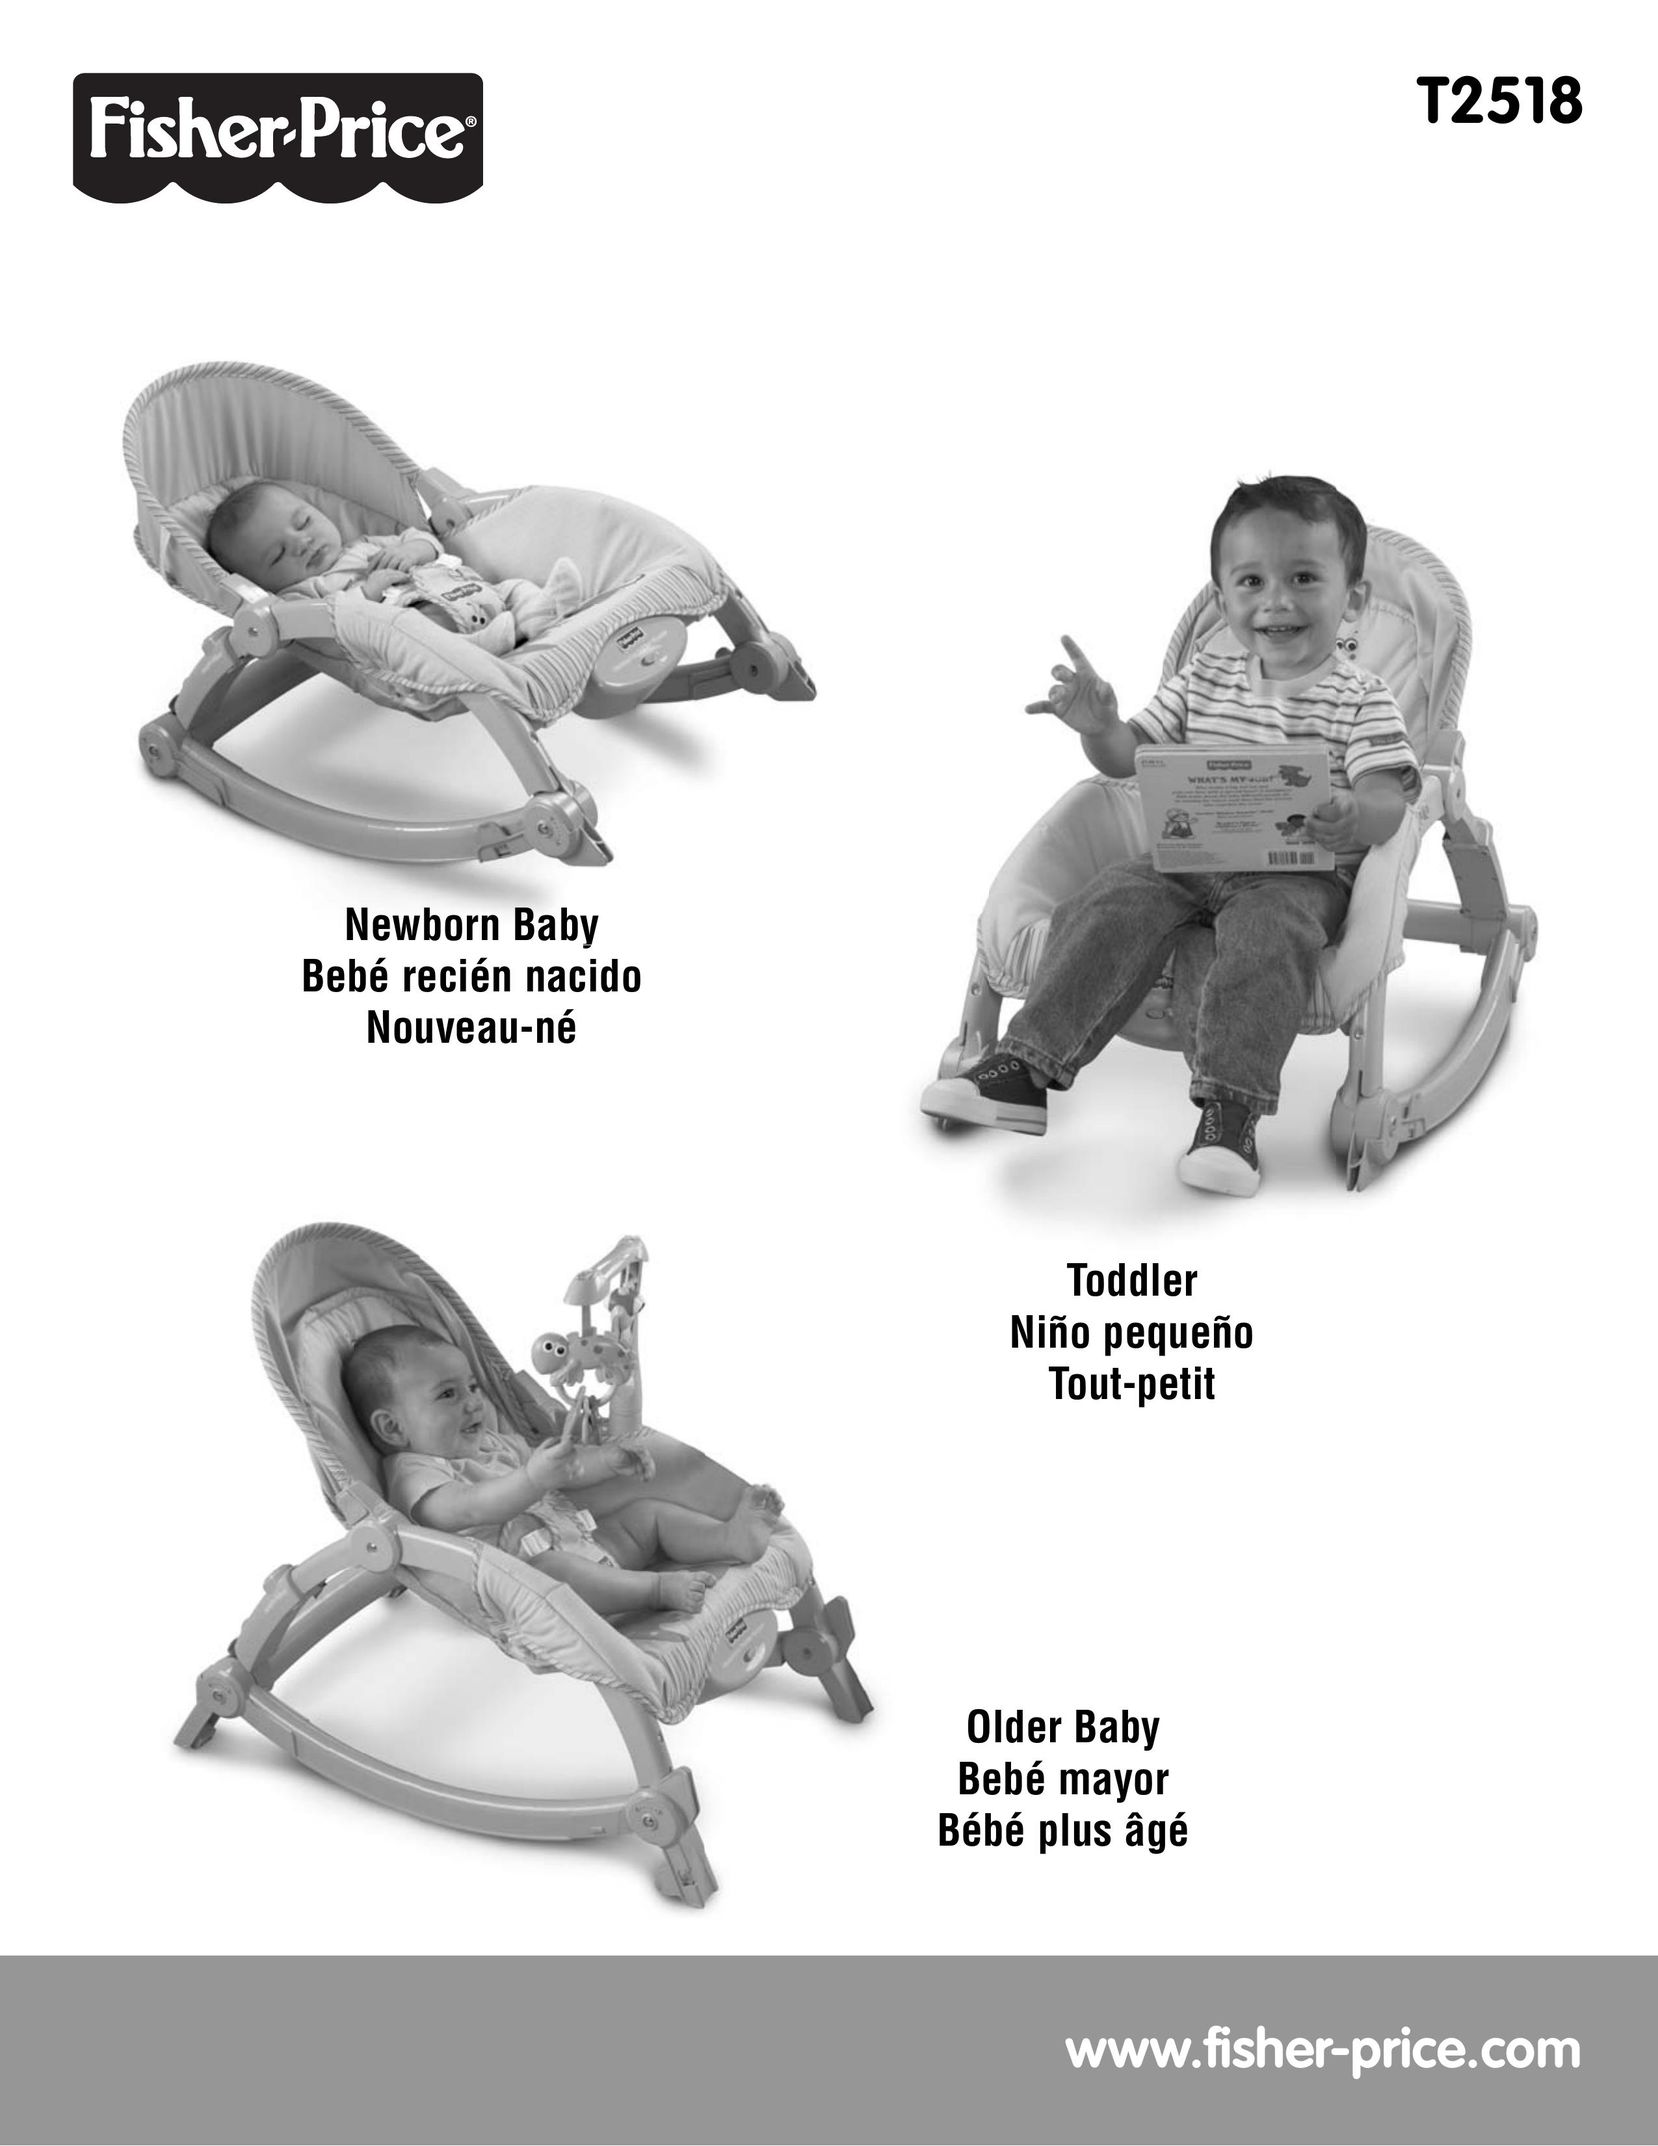 Fisher-Price T2518 Baby Furniture User Manual